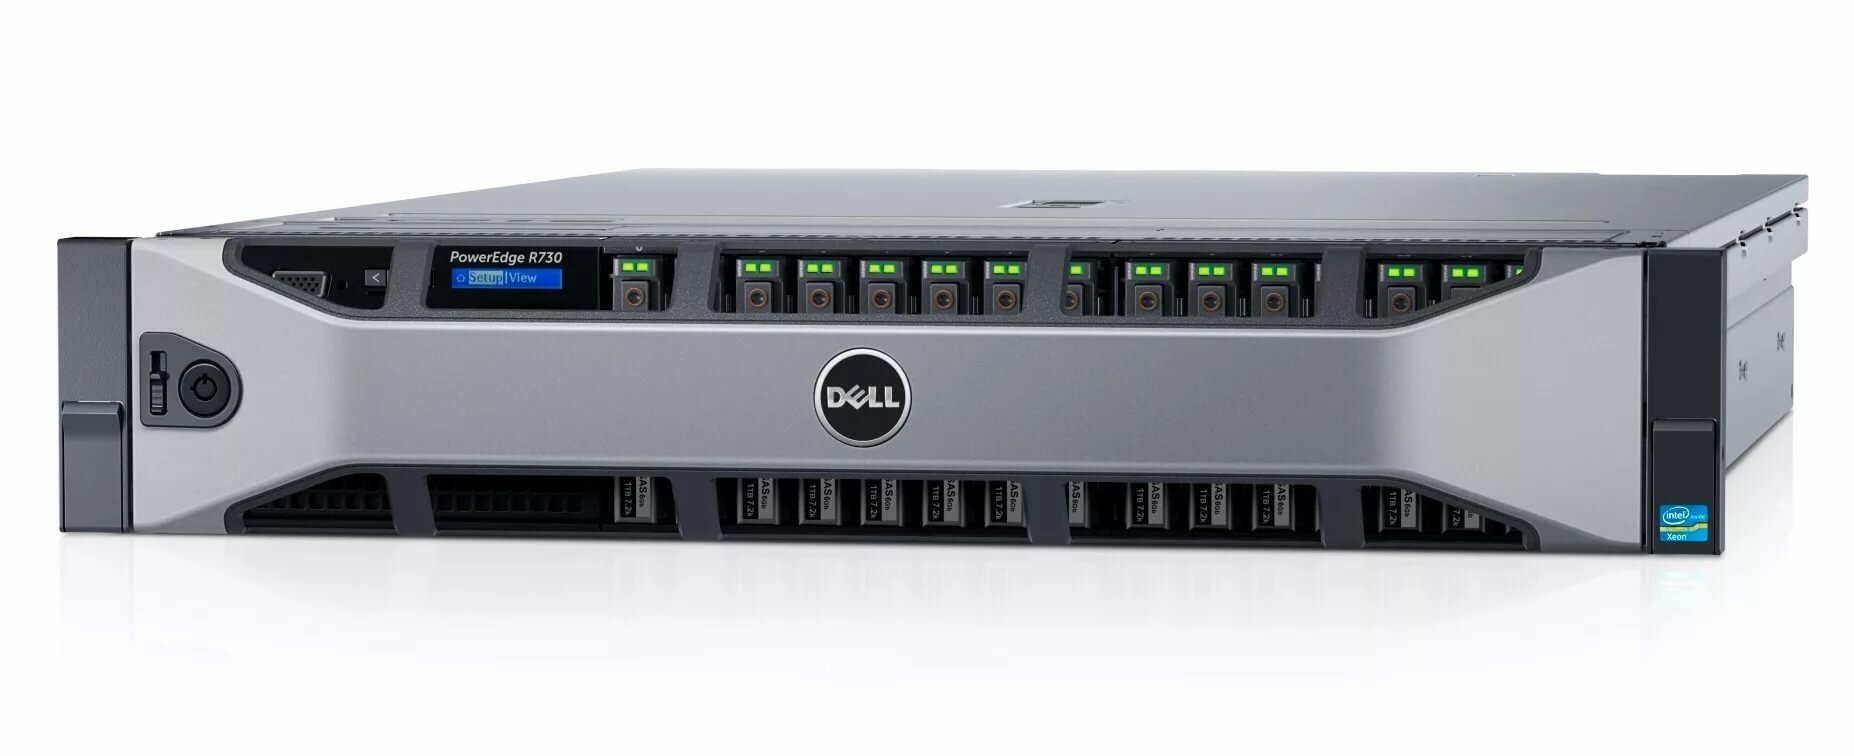 210-ACXU-034 Dell PowerEdge R730 (up to 8x3.5quot;), E5-2620v3 (2.4Ghz) 6C 15M 8GT/s 85W, 8GB (1*8GB) 2133 SV DR RDIMM, PERC H730 1GB NV, DVD+/-RW, No HDD, Broadcom 5720 QP 1Gbps, iDRAC8 Enterprise, RPS (1+1)*750W